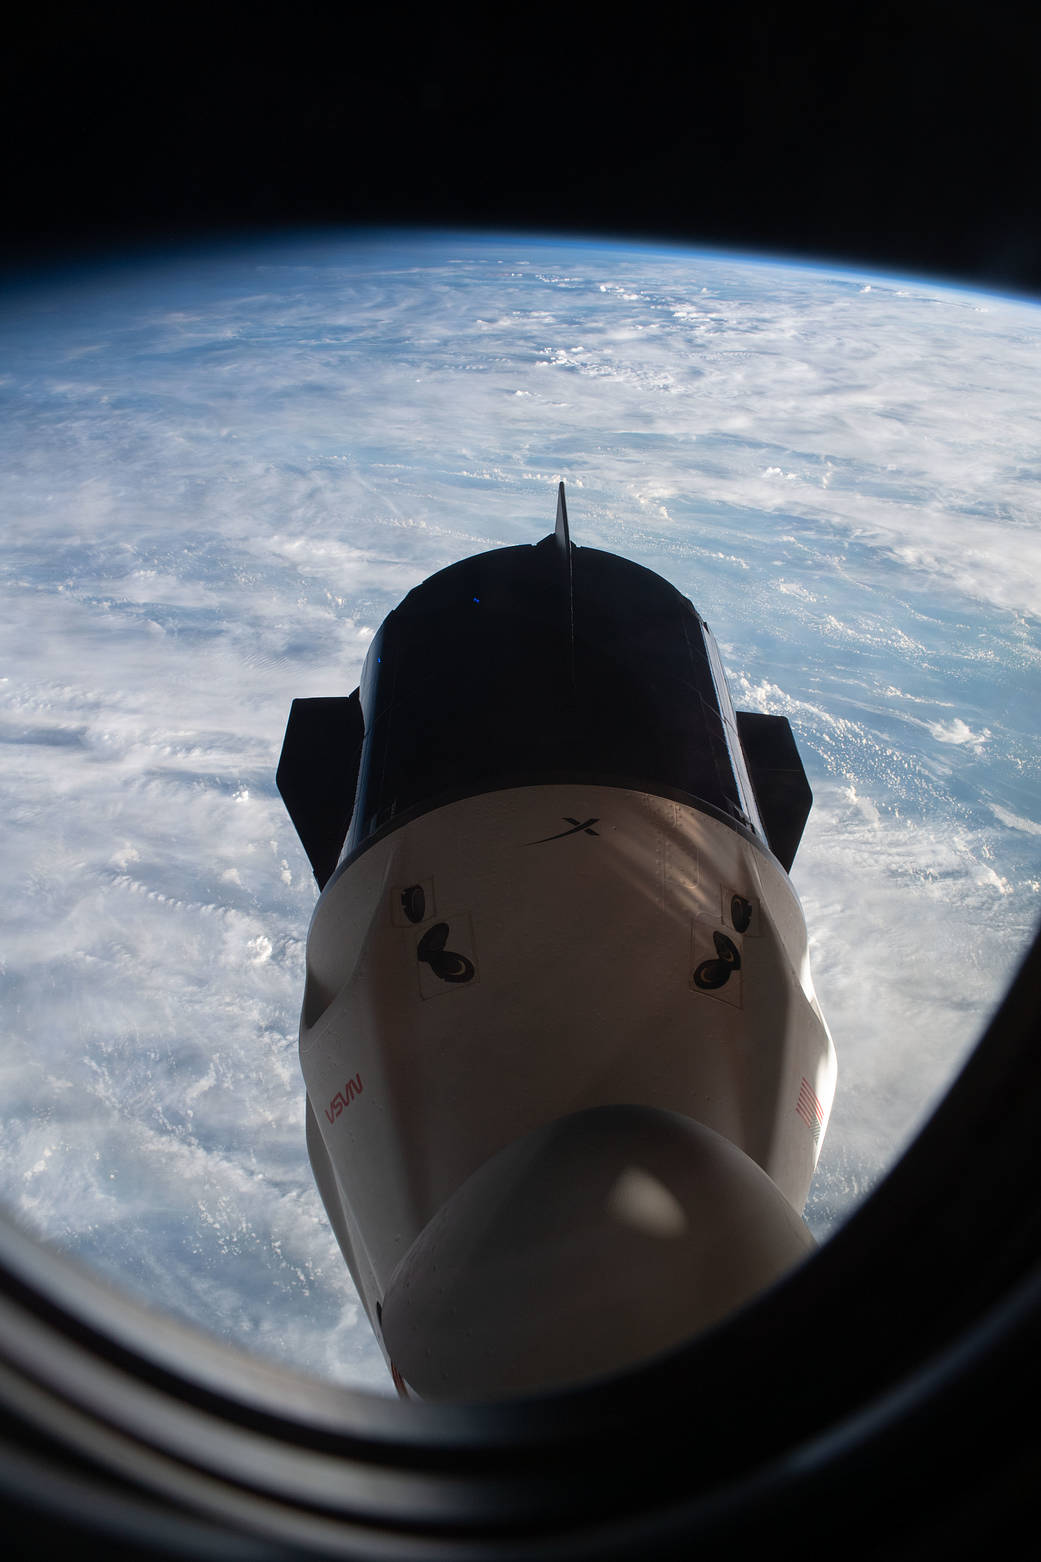 The SpaceX Dragon Endurance crew ship